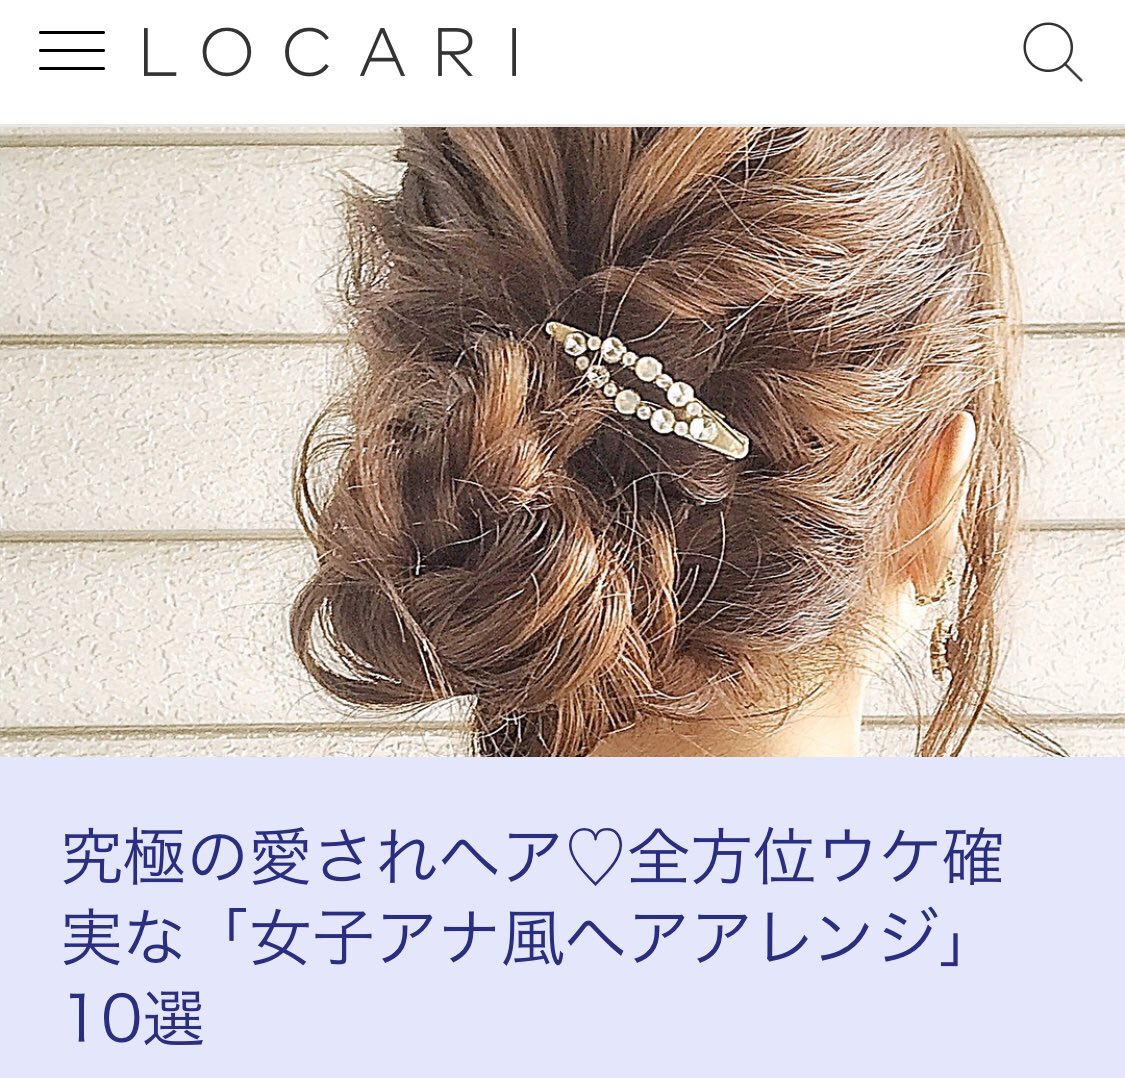 Chiichii Locari On Twitter 究極の愛されヘア 全方位ウケ確実な